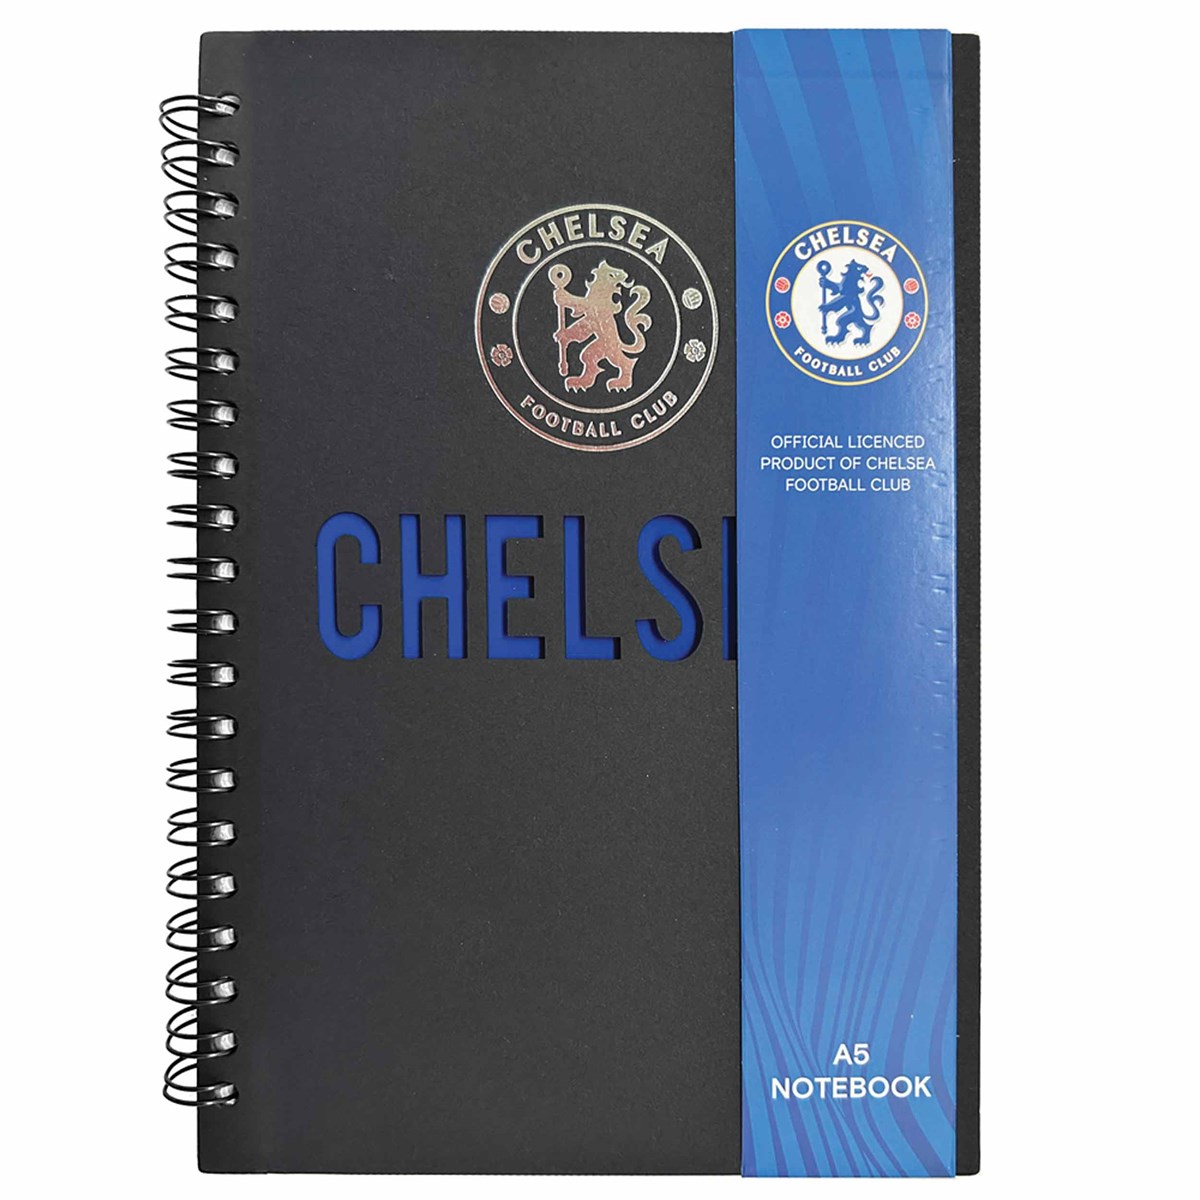 Chelsea notebook